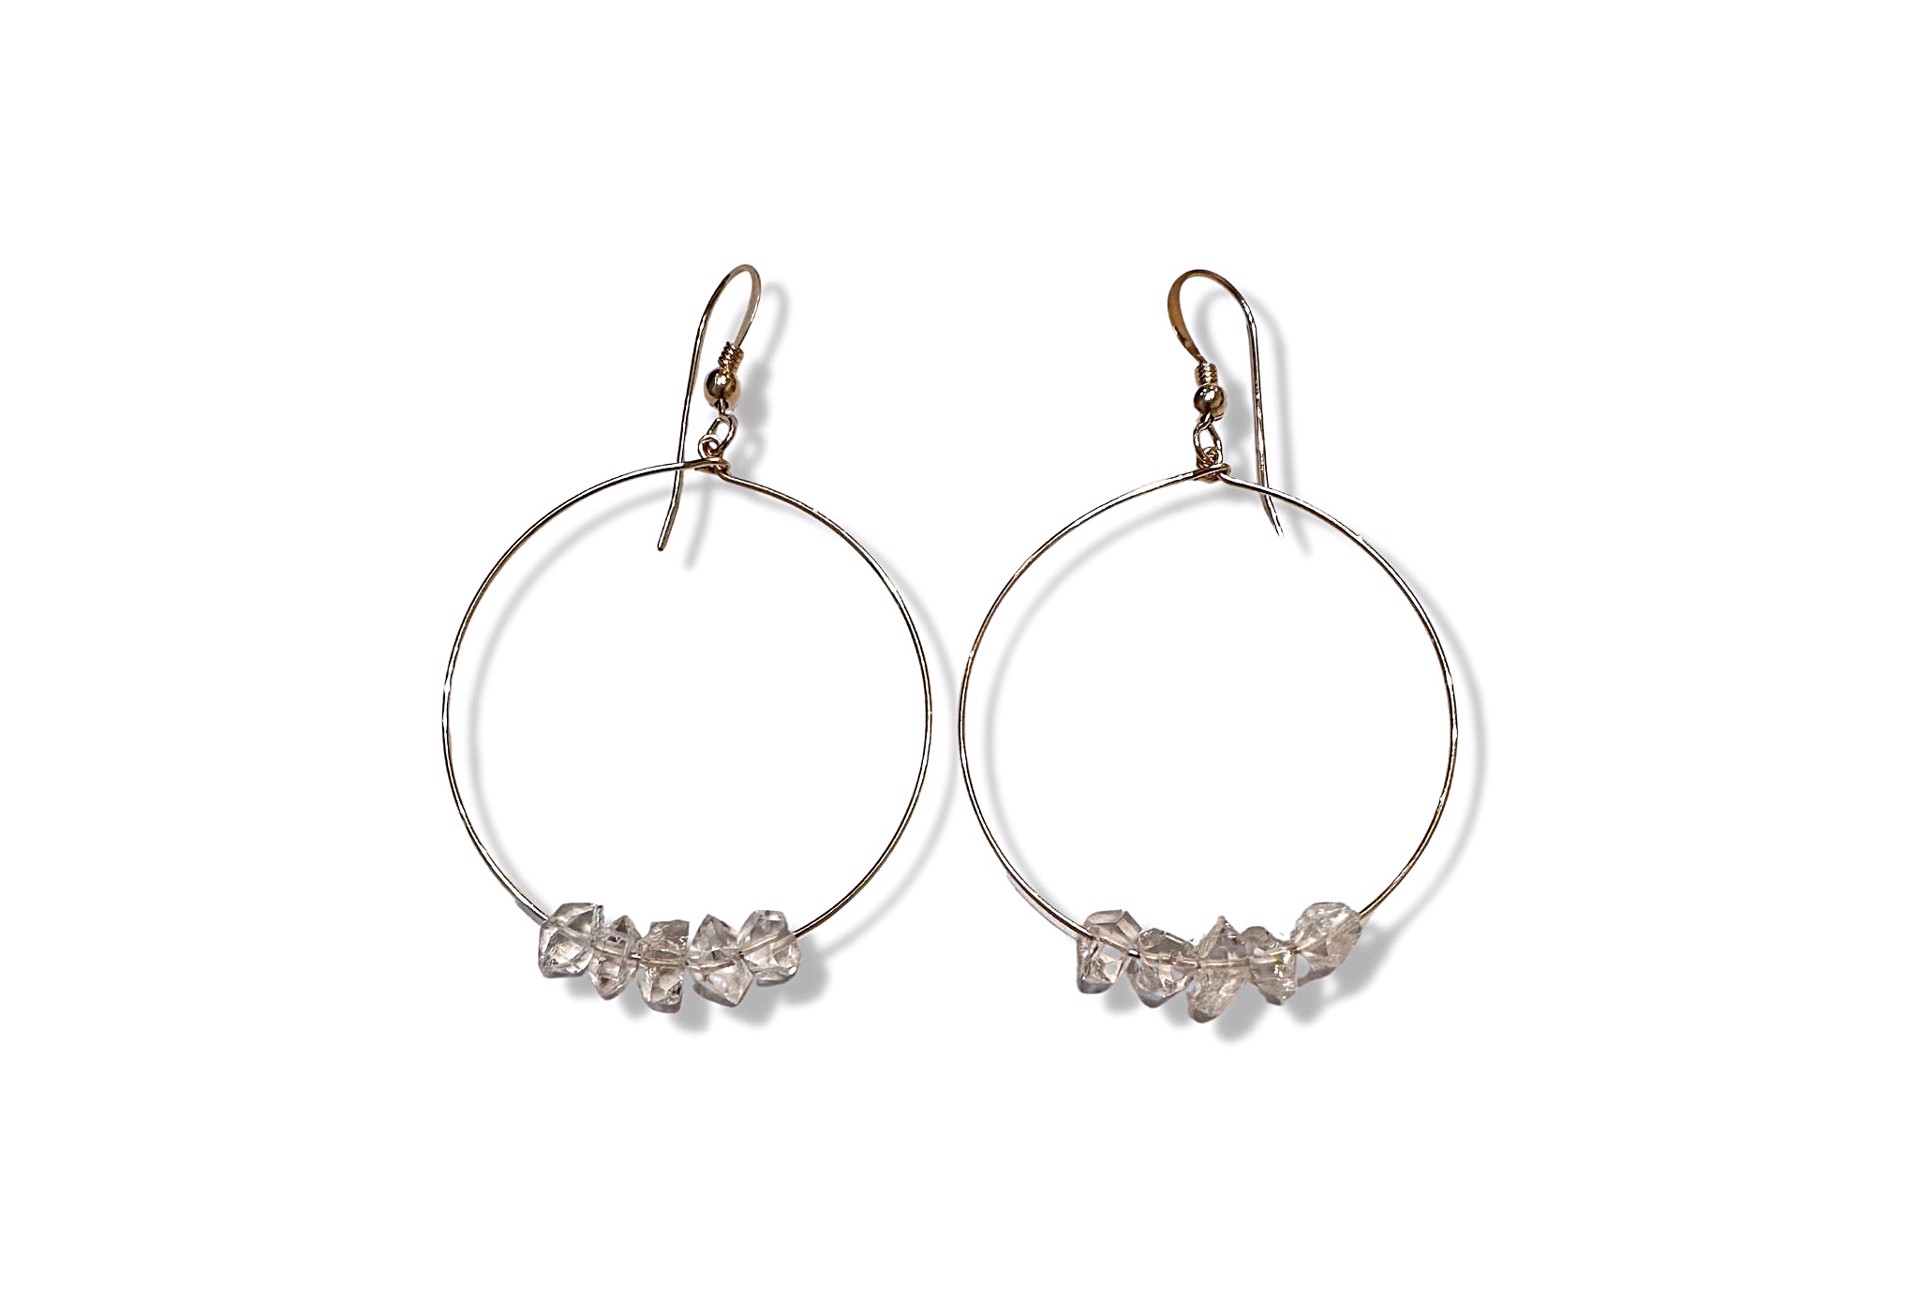 Earrings - Herkimer Diamond Quartz Hoops by Julia Balestracci